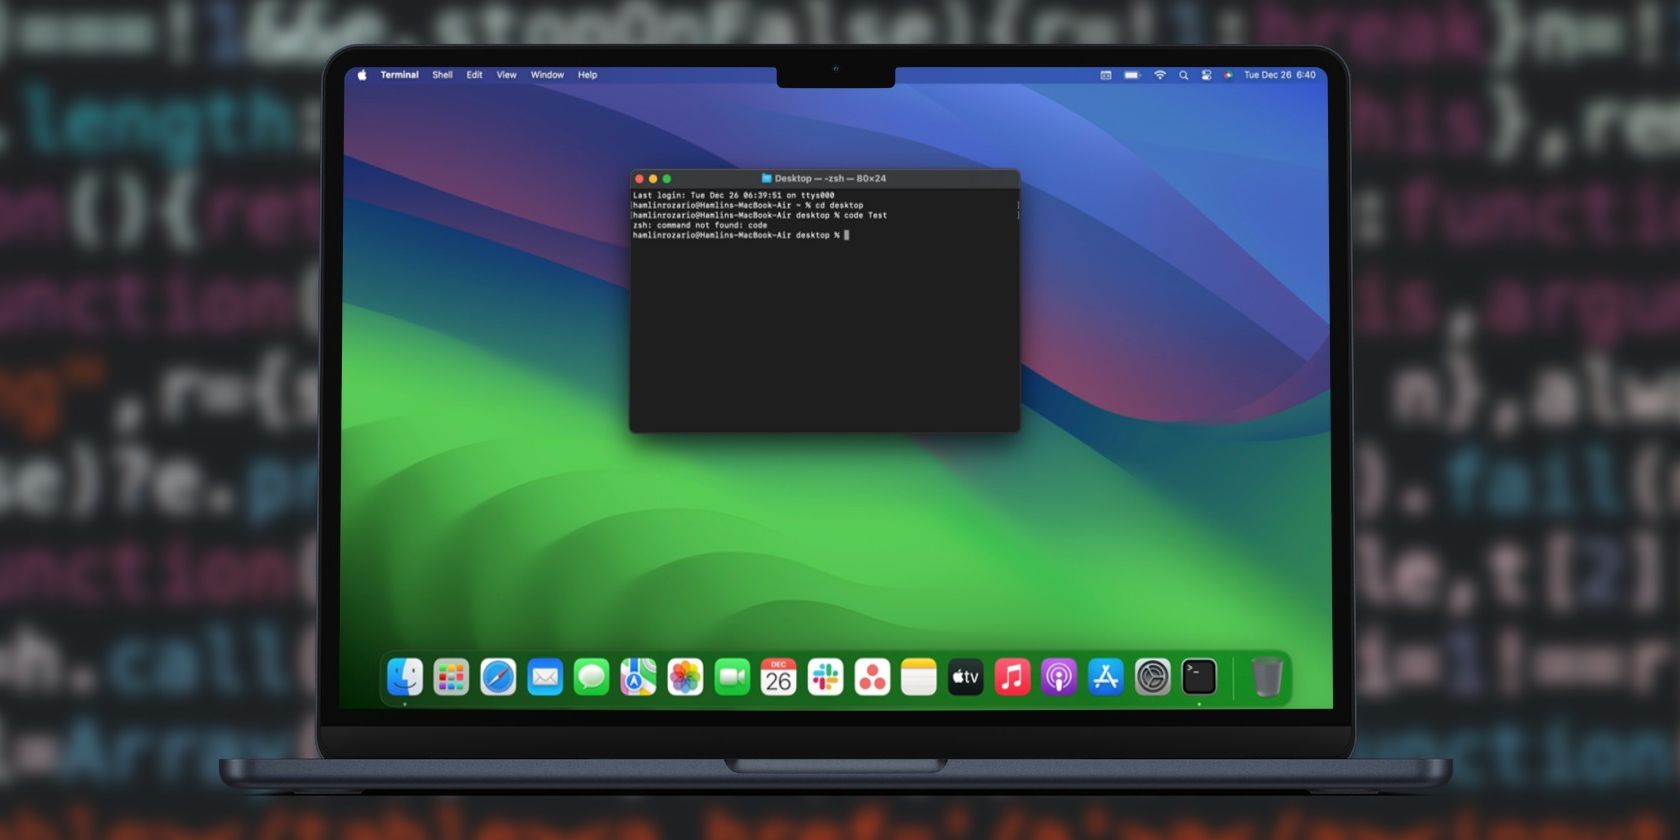 Terminal app running on a MacBook Air